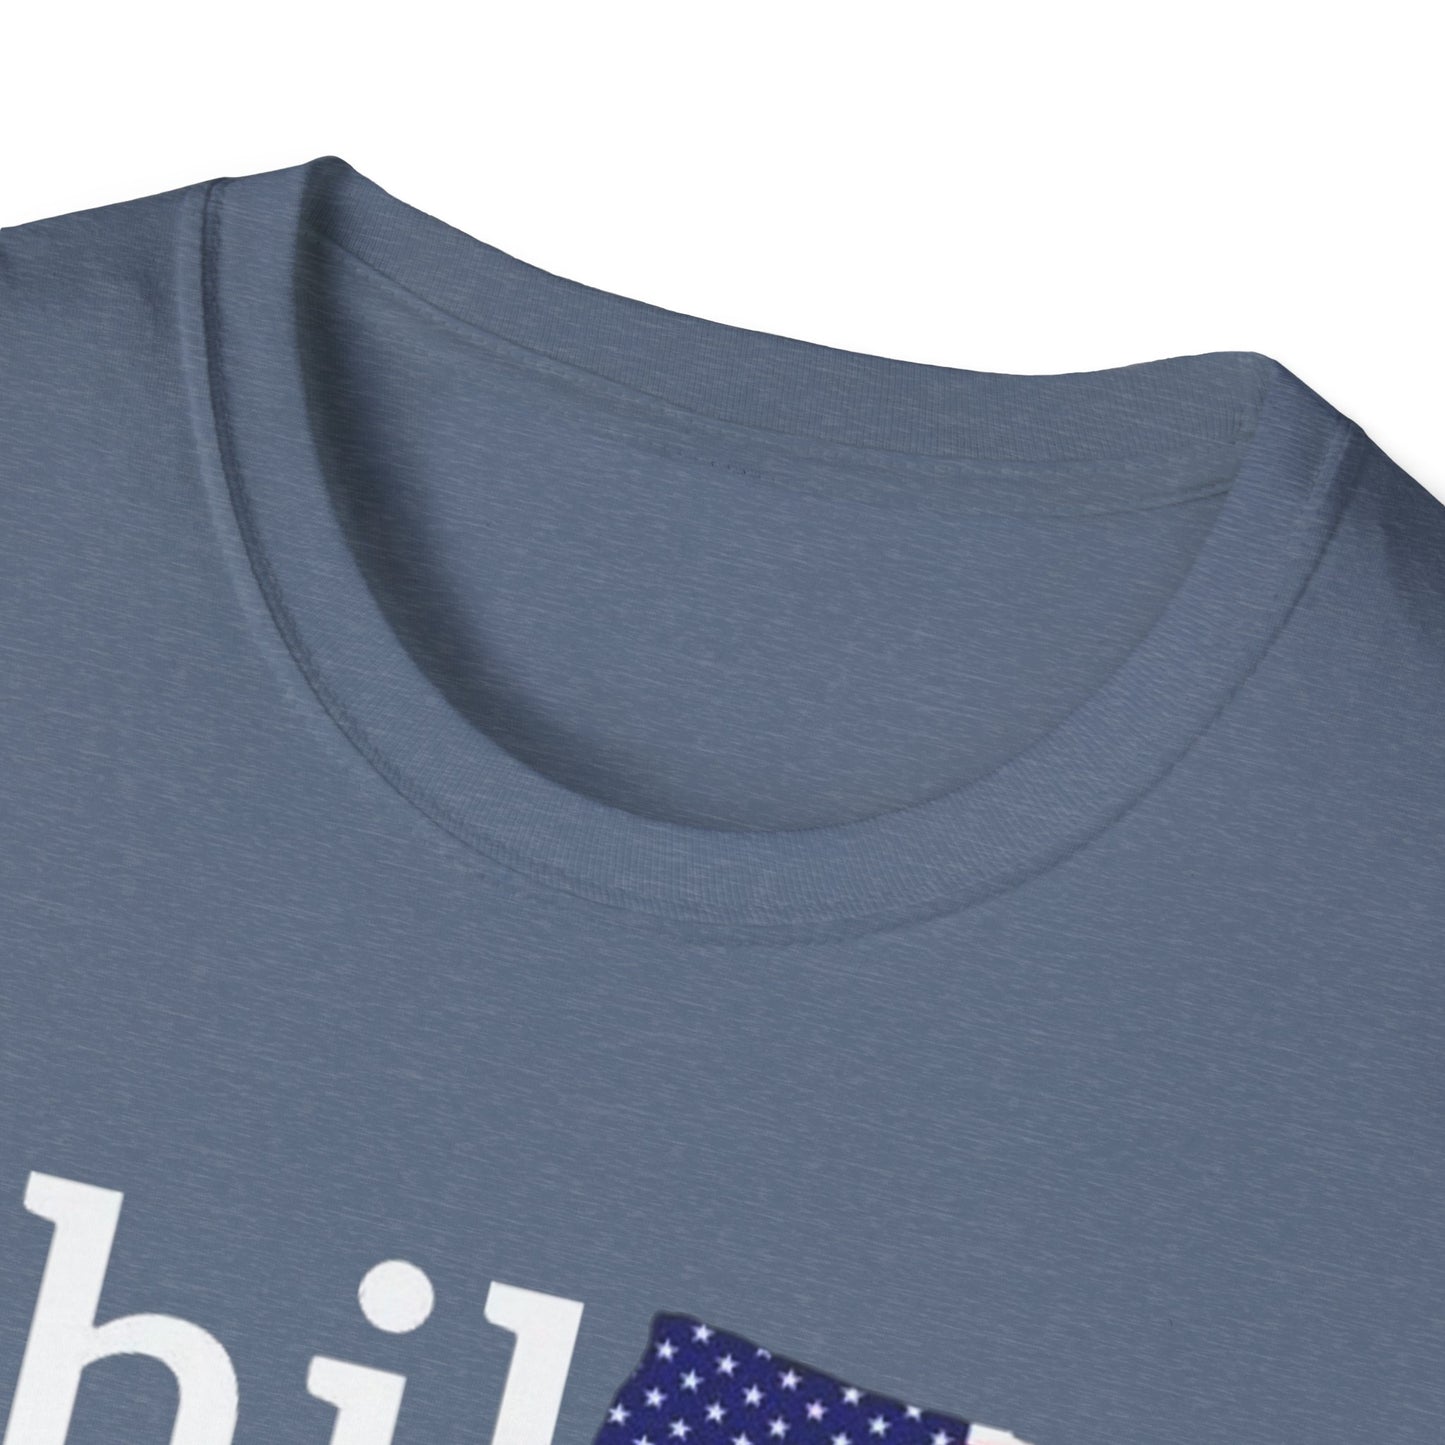 Phil Mianus 2024 - Unisex Softstyle T-Shirt